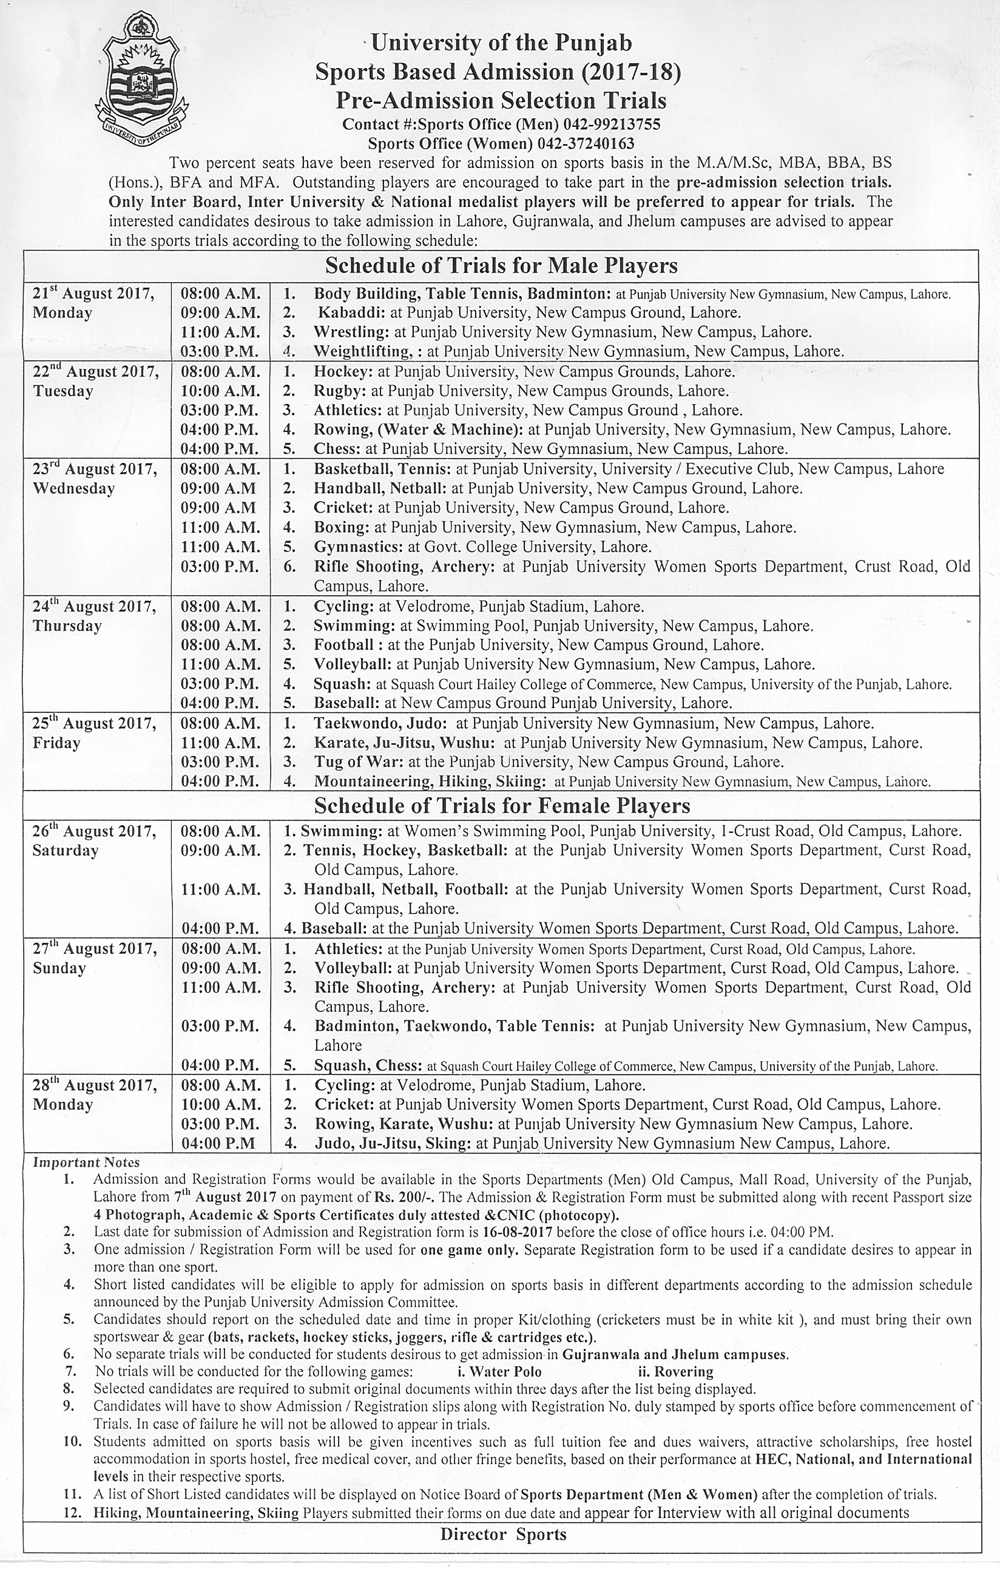 University of the Punjab Sports Based Admissions 2017-2018